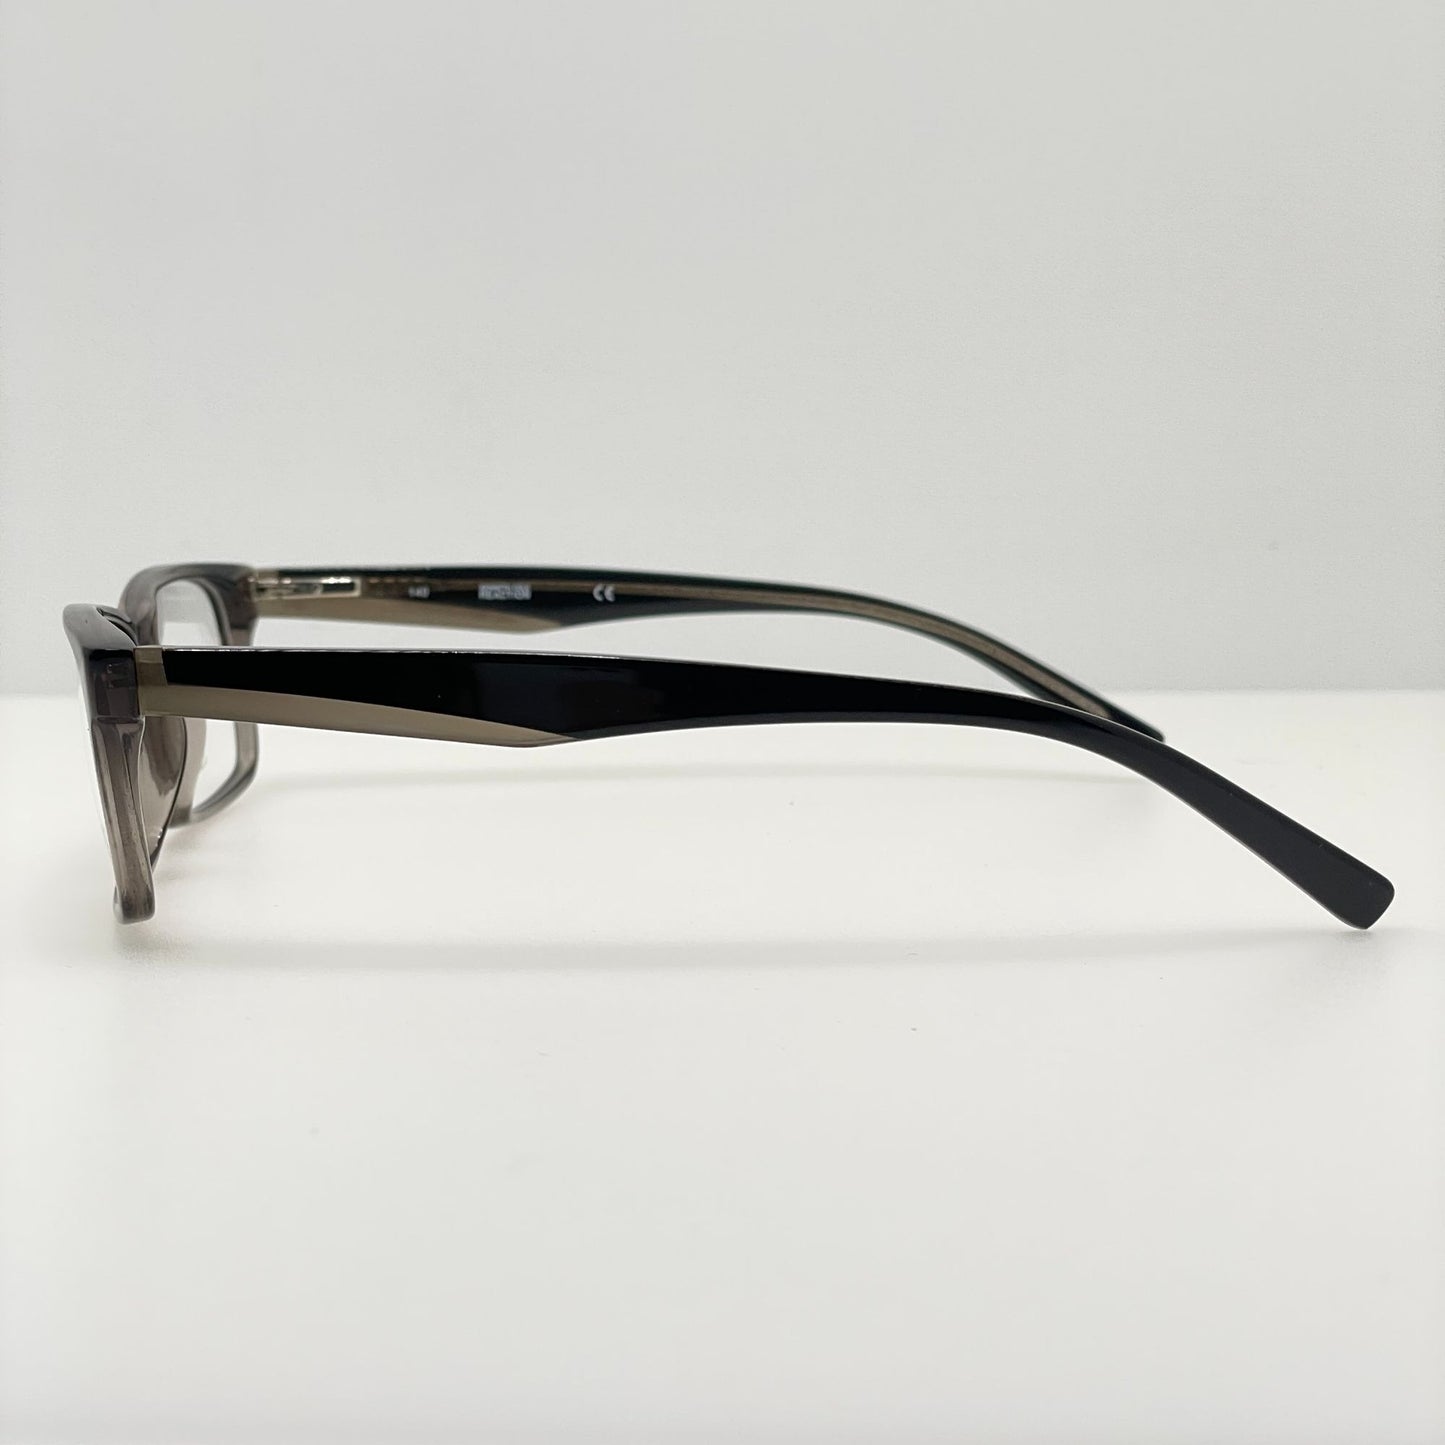 Kenneth Cole Eyeglasses Eye Glasses Frames KC729 020 53-17-140